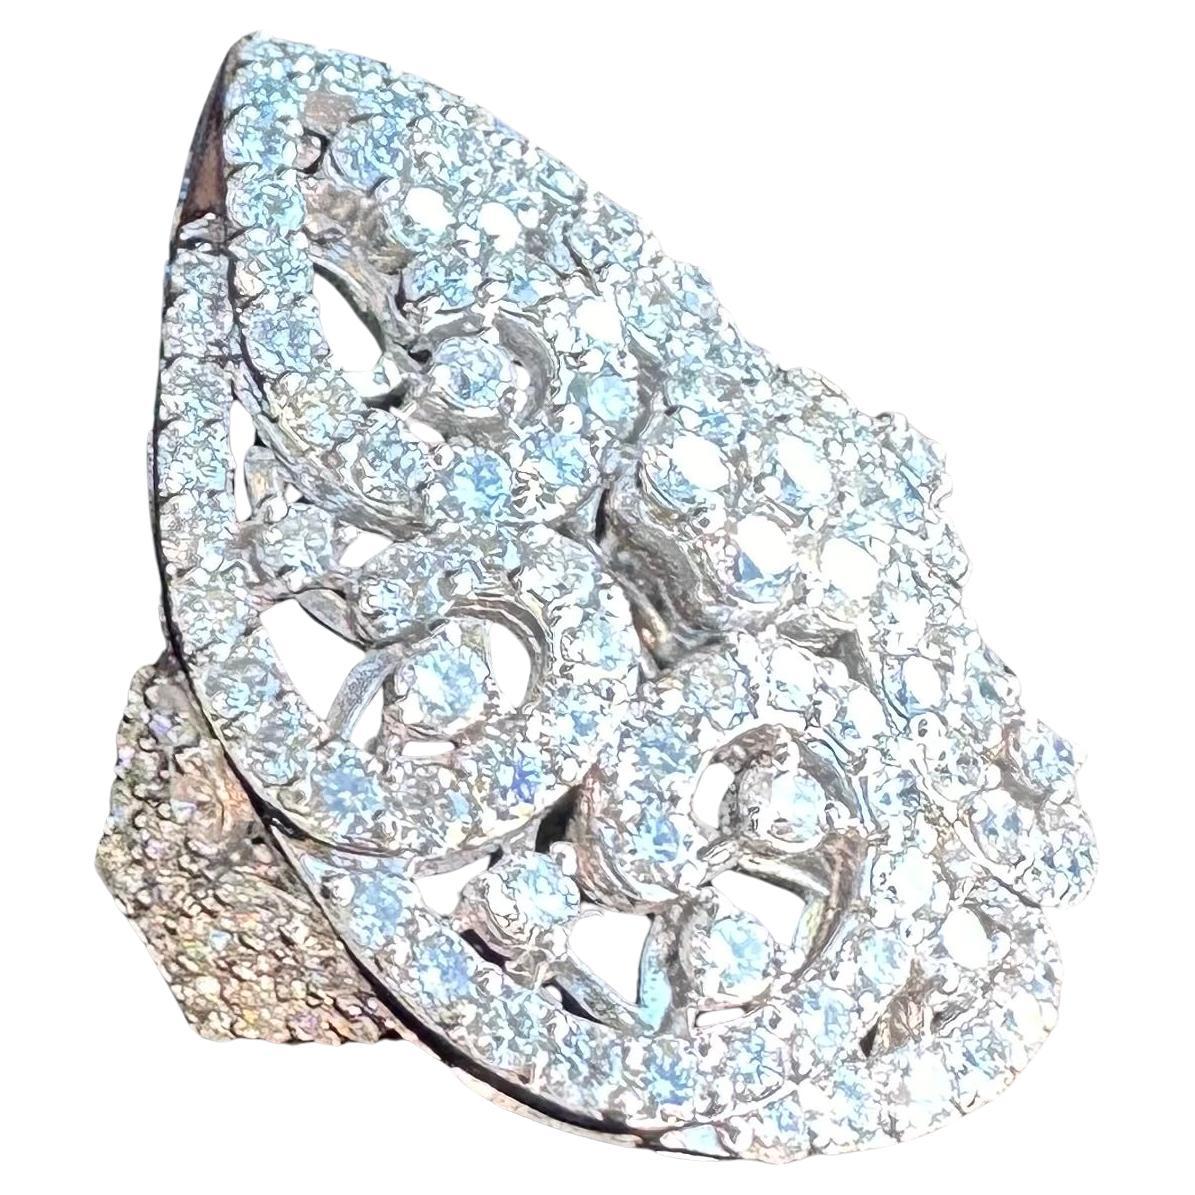  Elegant 7.00 Carat Diamond Pear Shaped Cluster Cocktail Ring in 18K White Gold